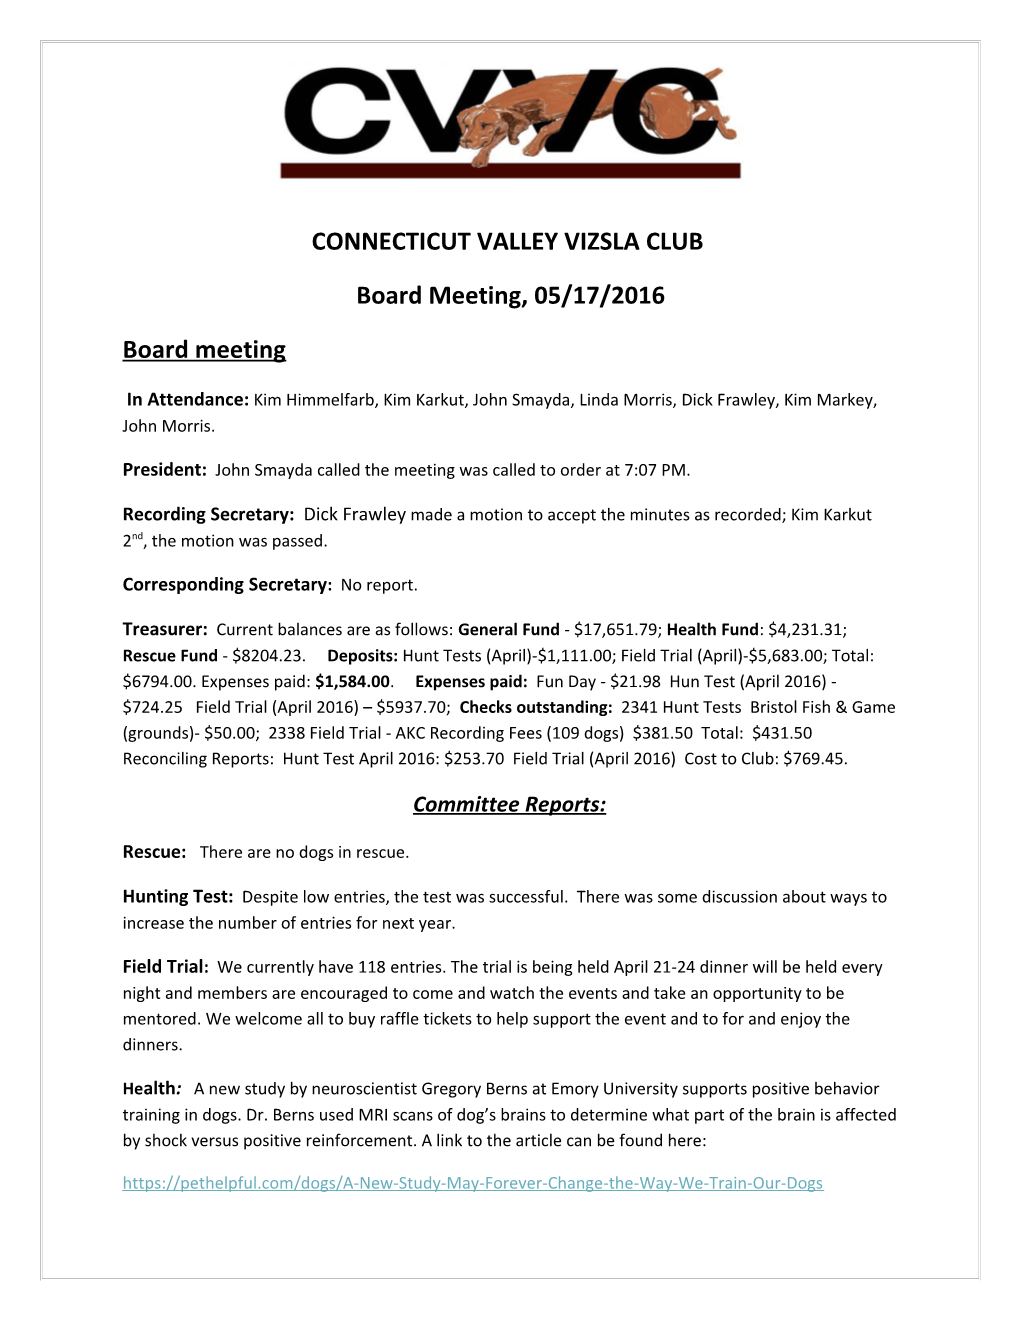 Connecticut Valley Vizsla Club